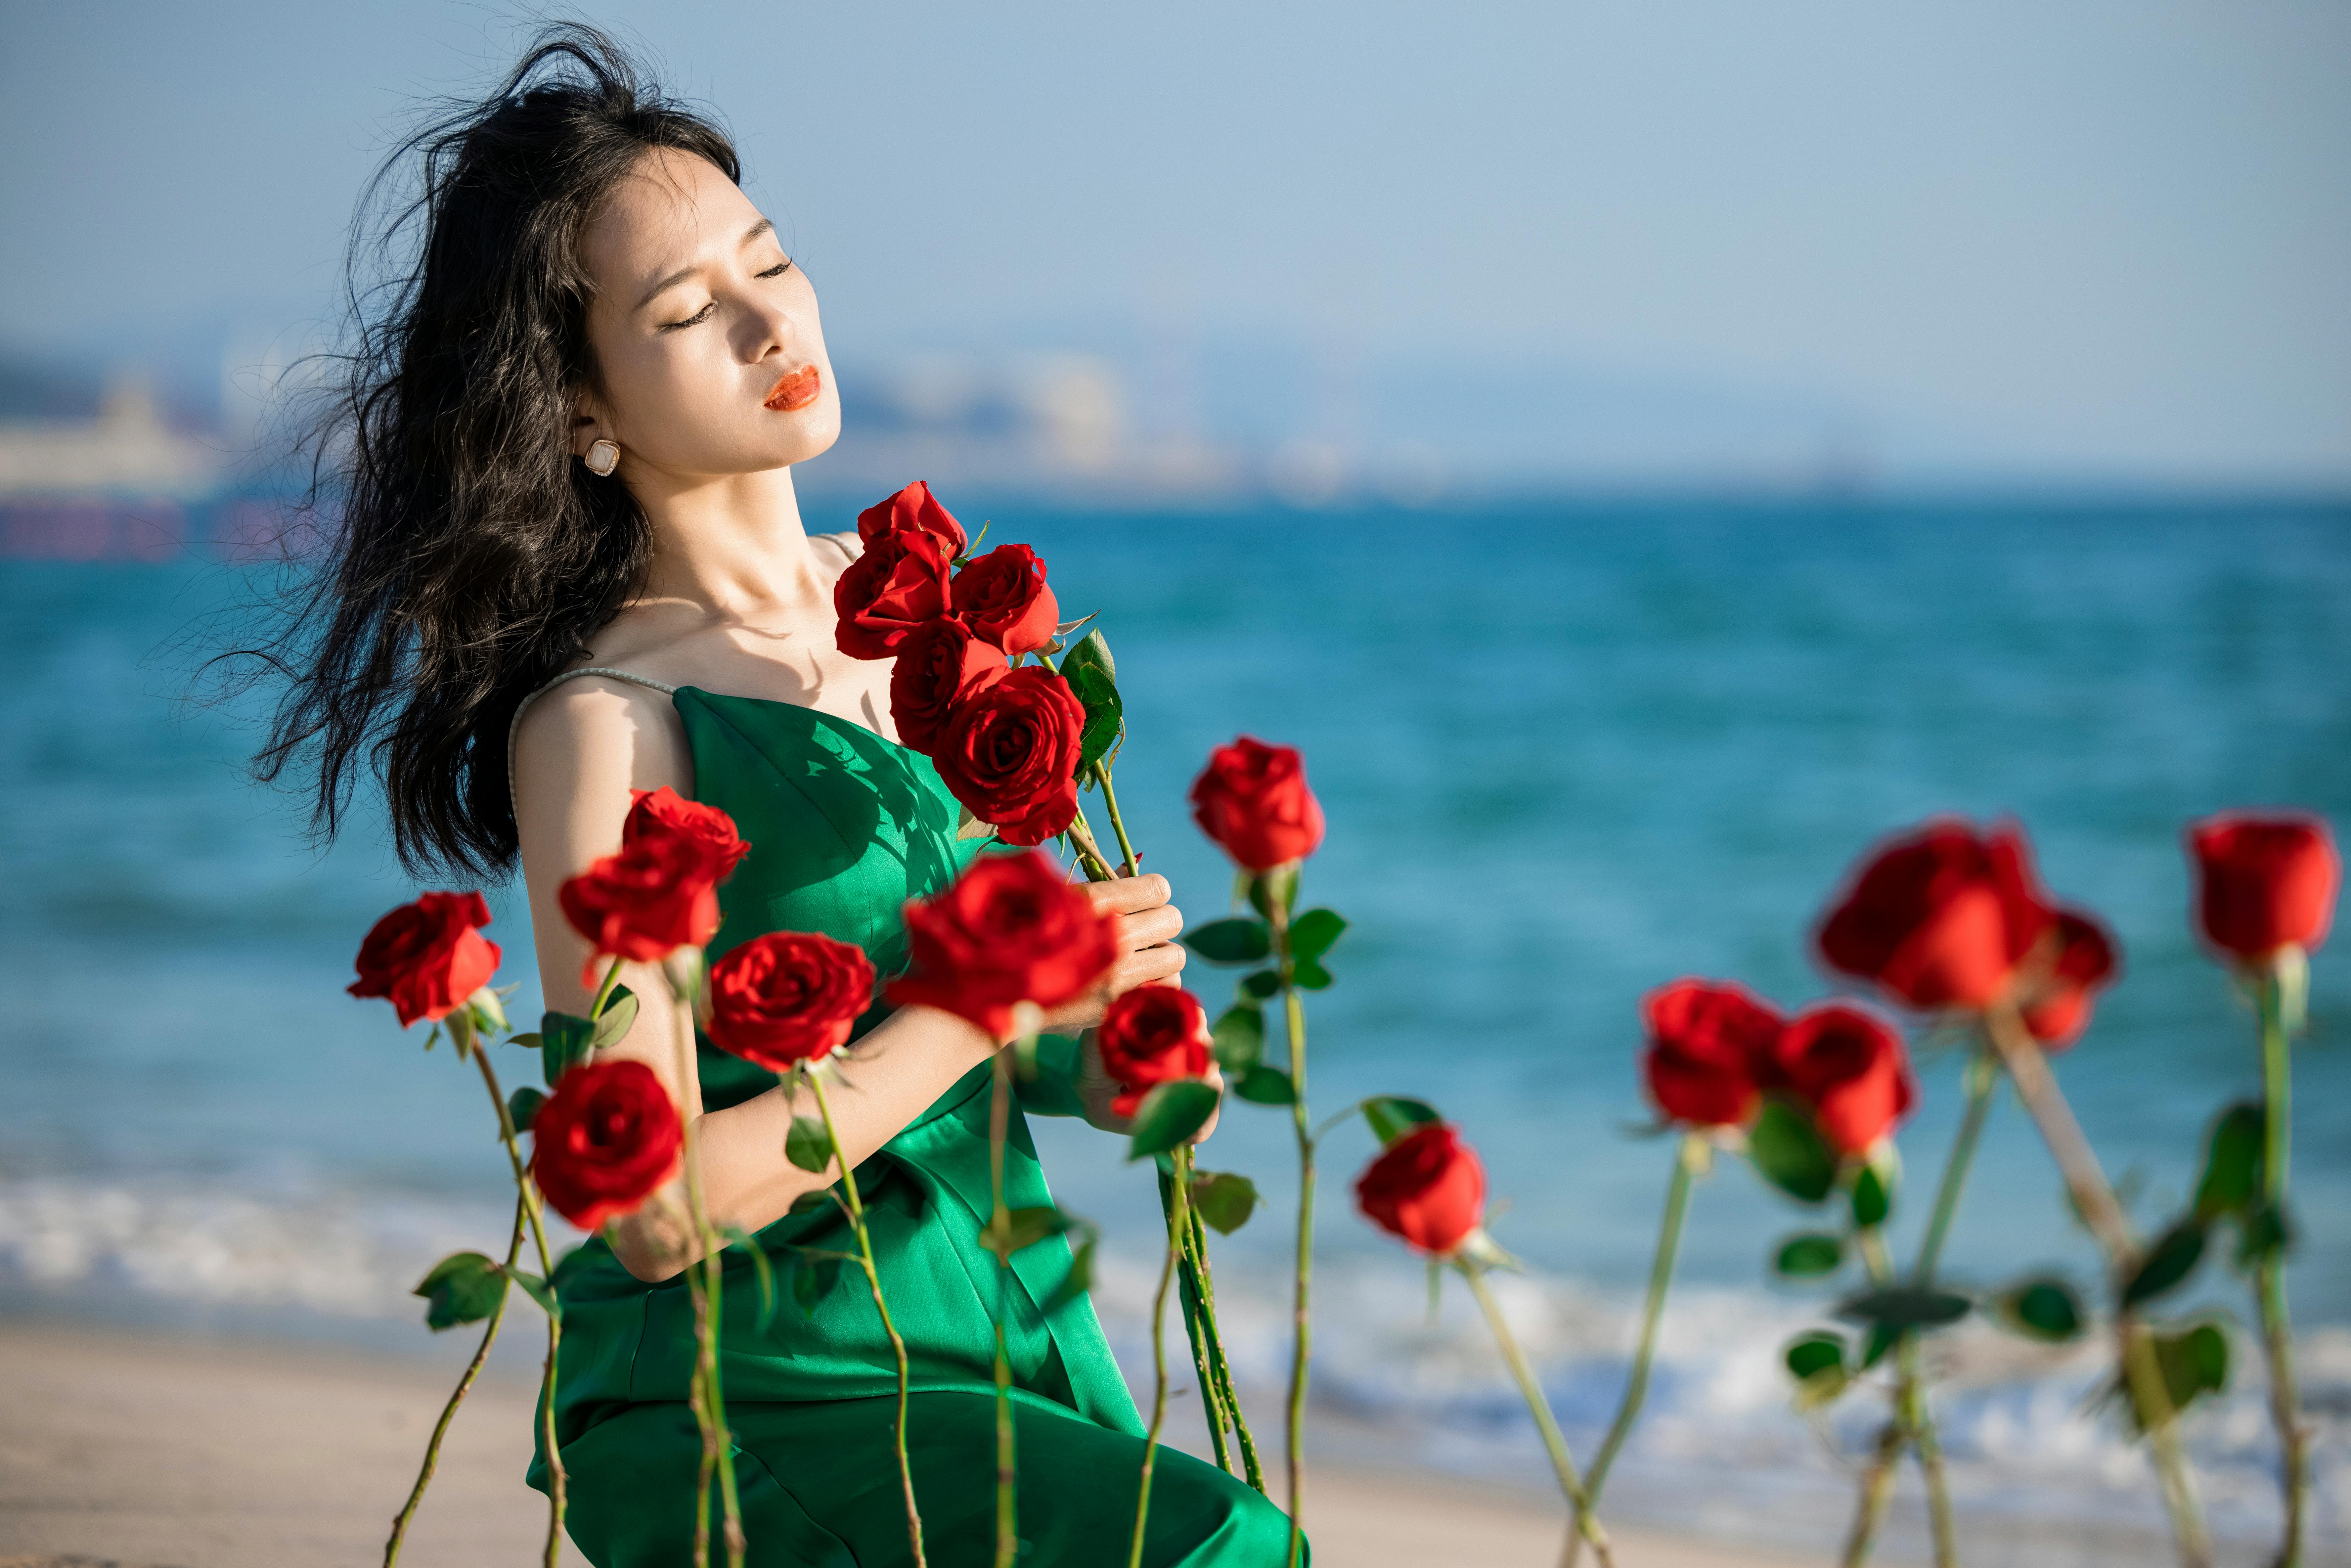 Model posing with rose | Model poses, Brunette woman, Photoshoot studio